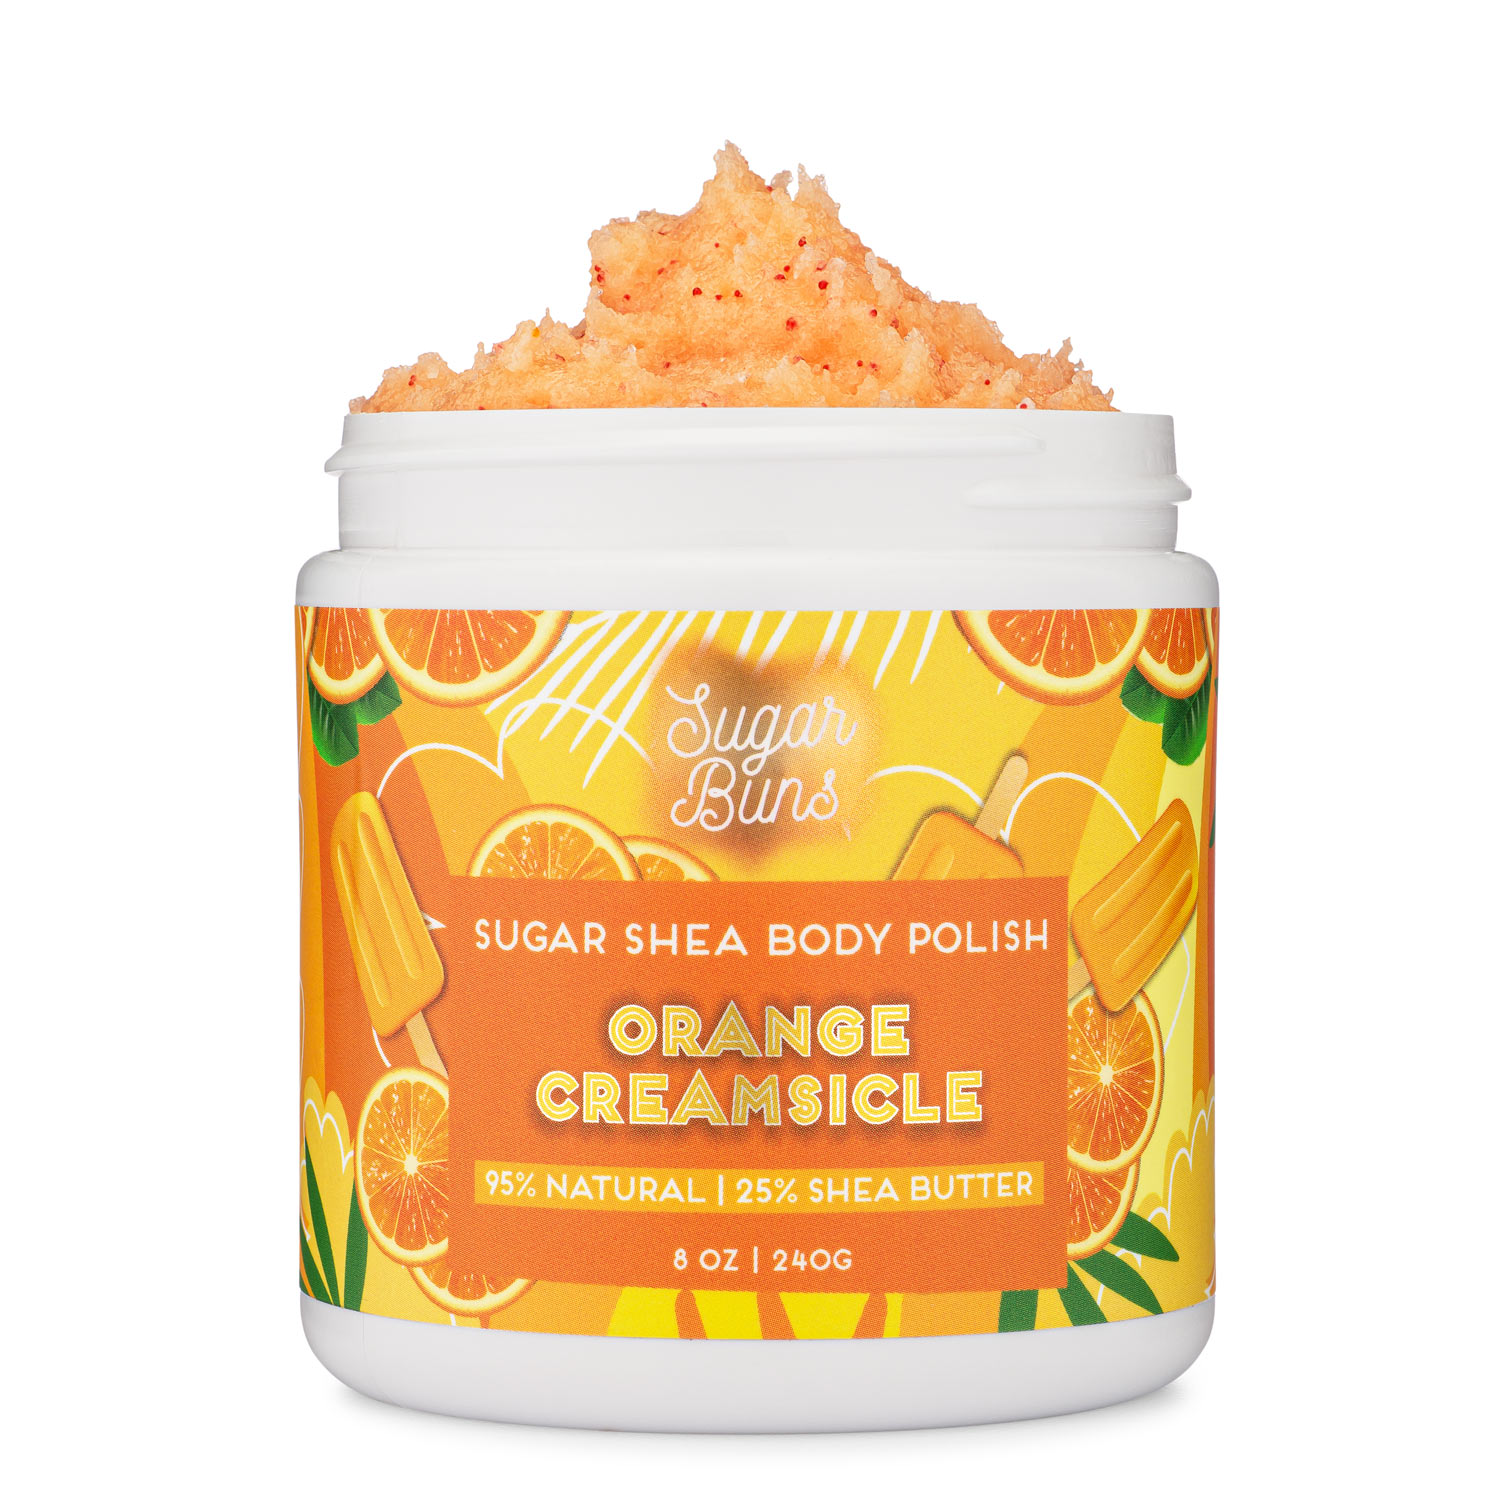 Sugar Shea Body Polish - Orange Creamsicle Sugar Buns Image